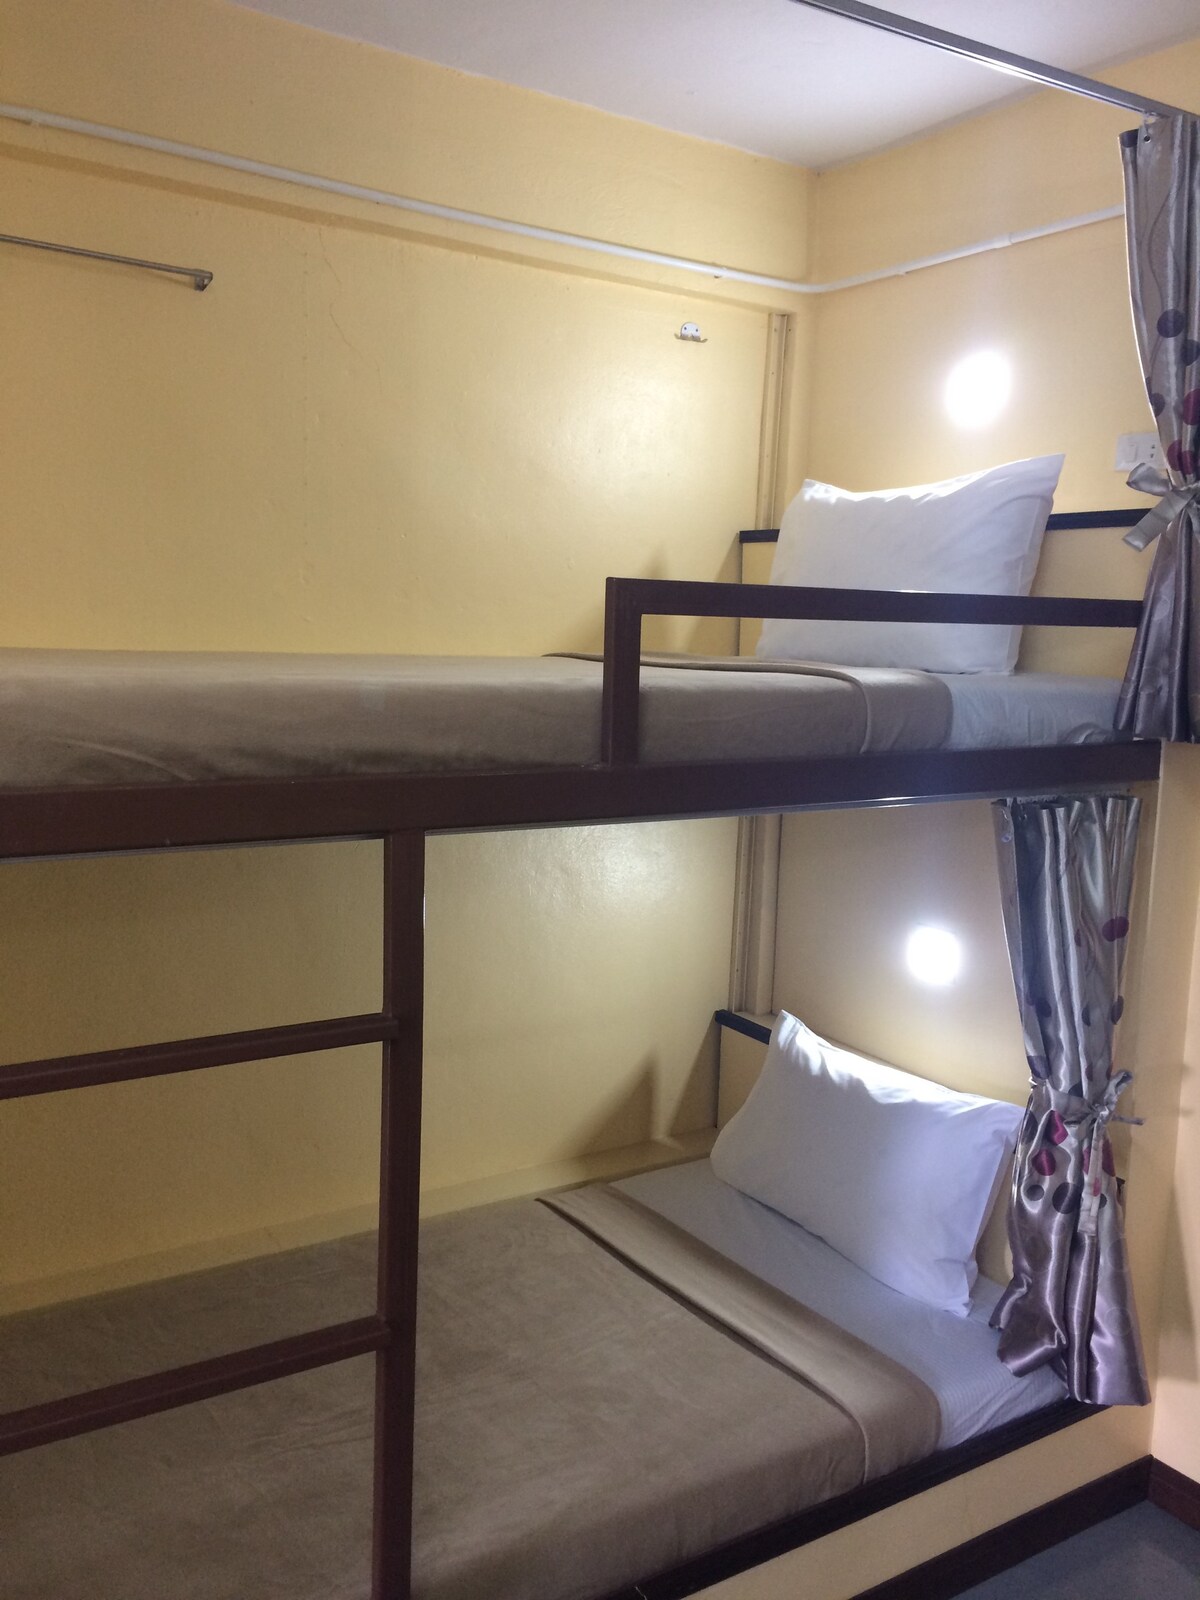 Sleep Well Hostel-Bunk Bed in Mixed Dormitory Room